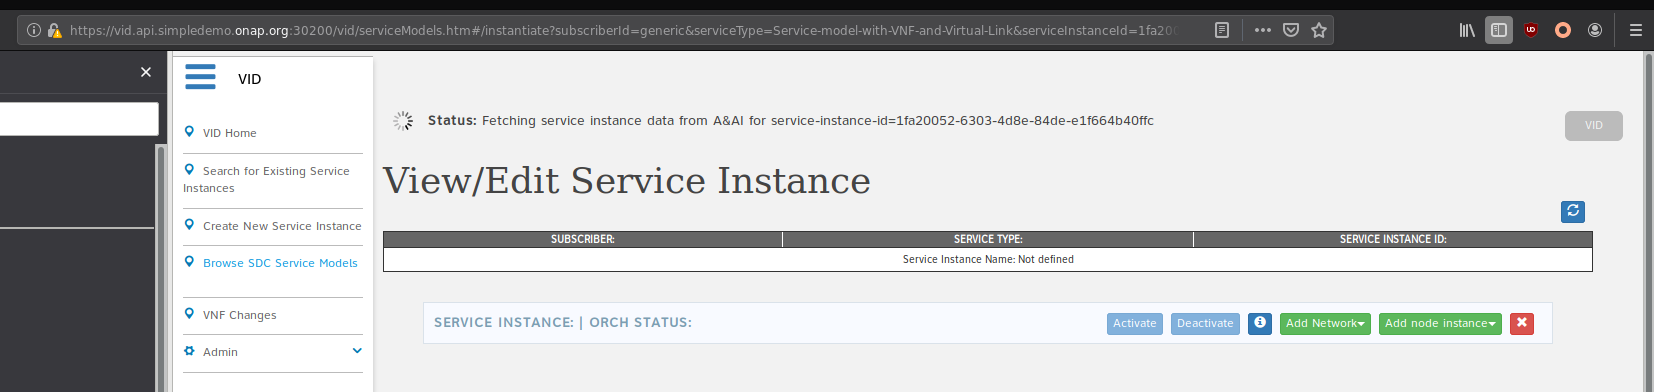 _images/create-service-instance-alacarte-VNF-network.png